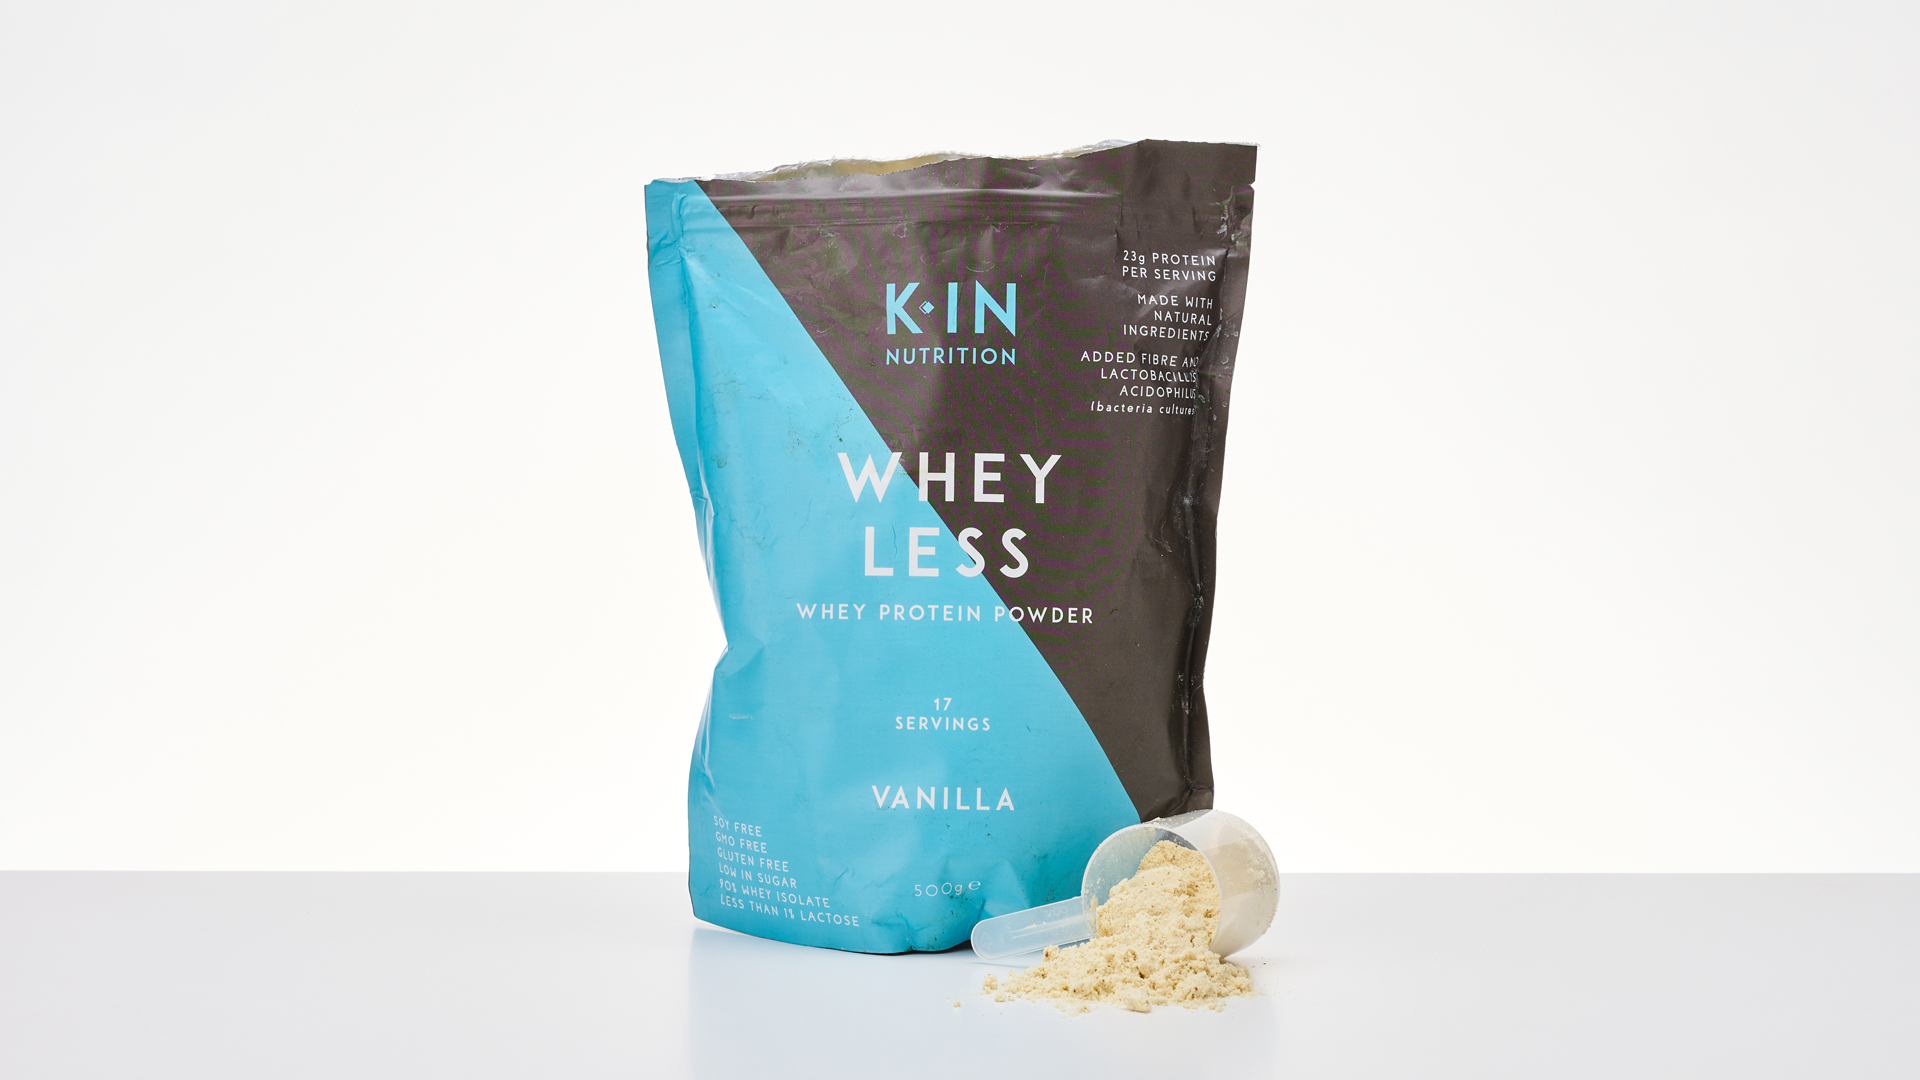 kin nutrition whey less protein powder